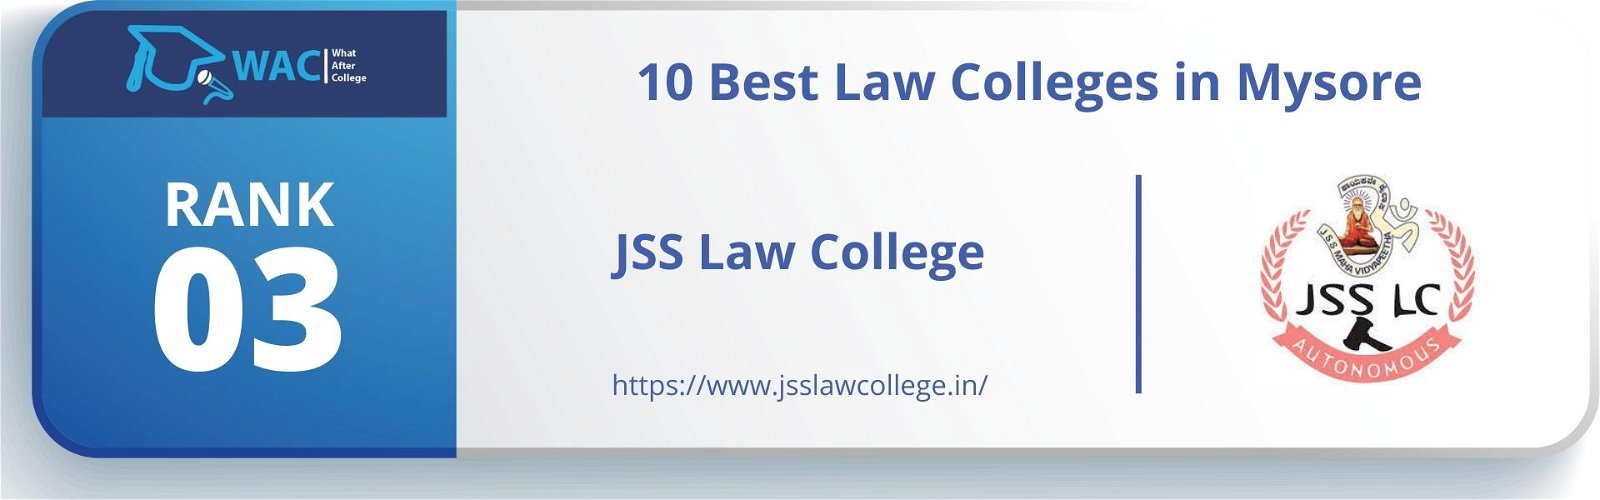 Law Colleges in Mysore